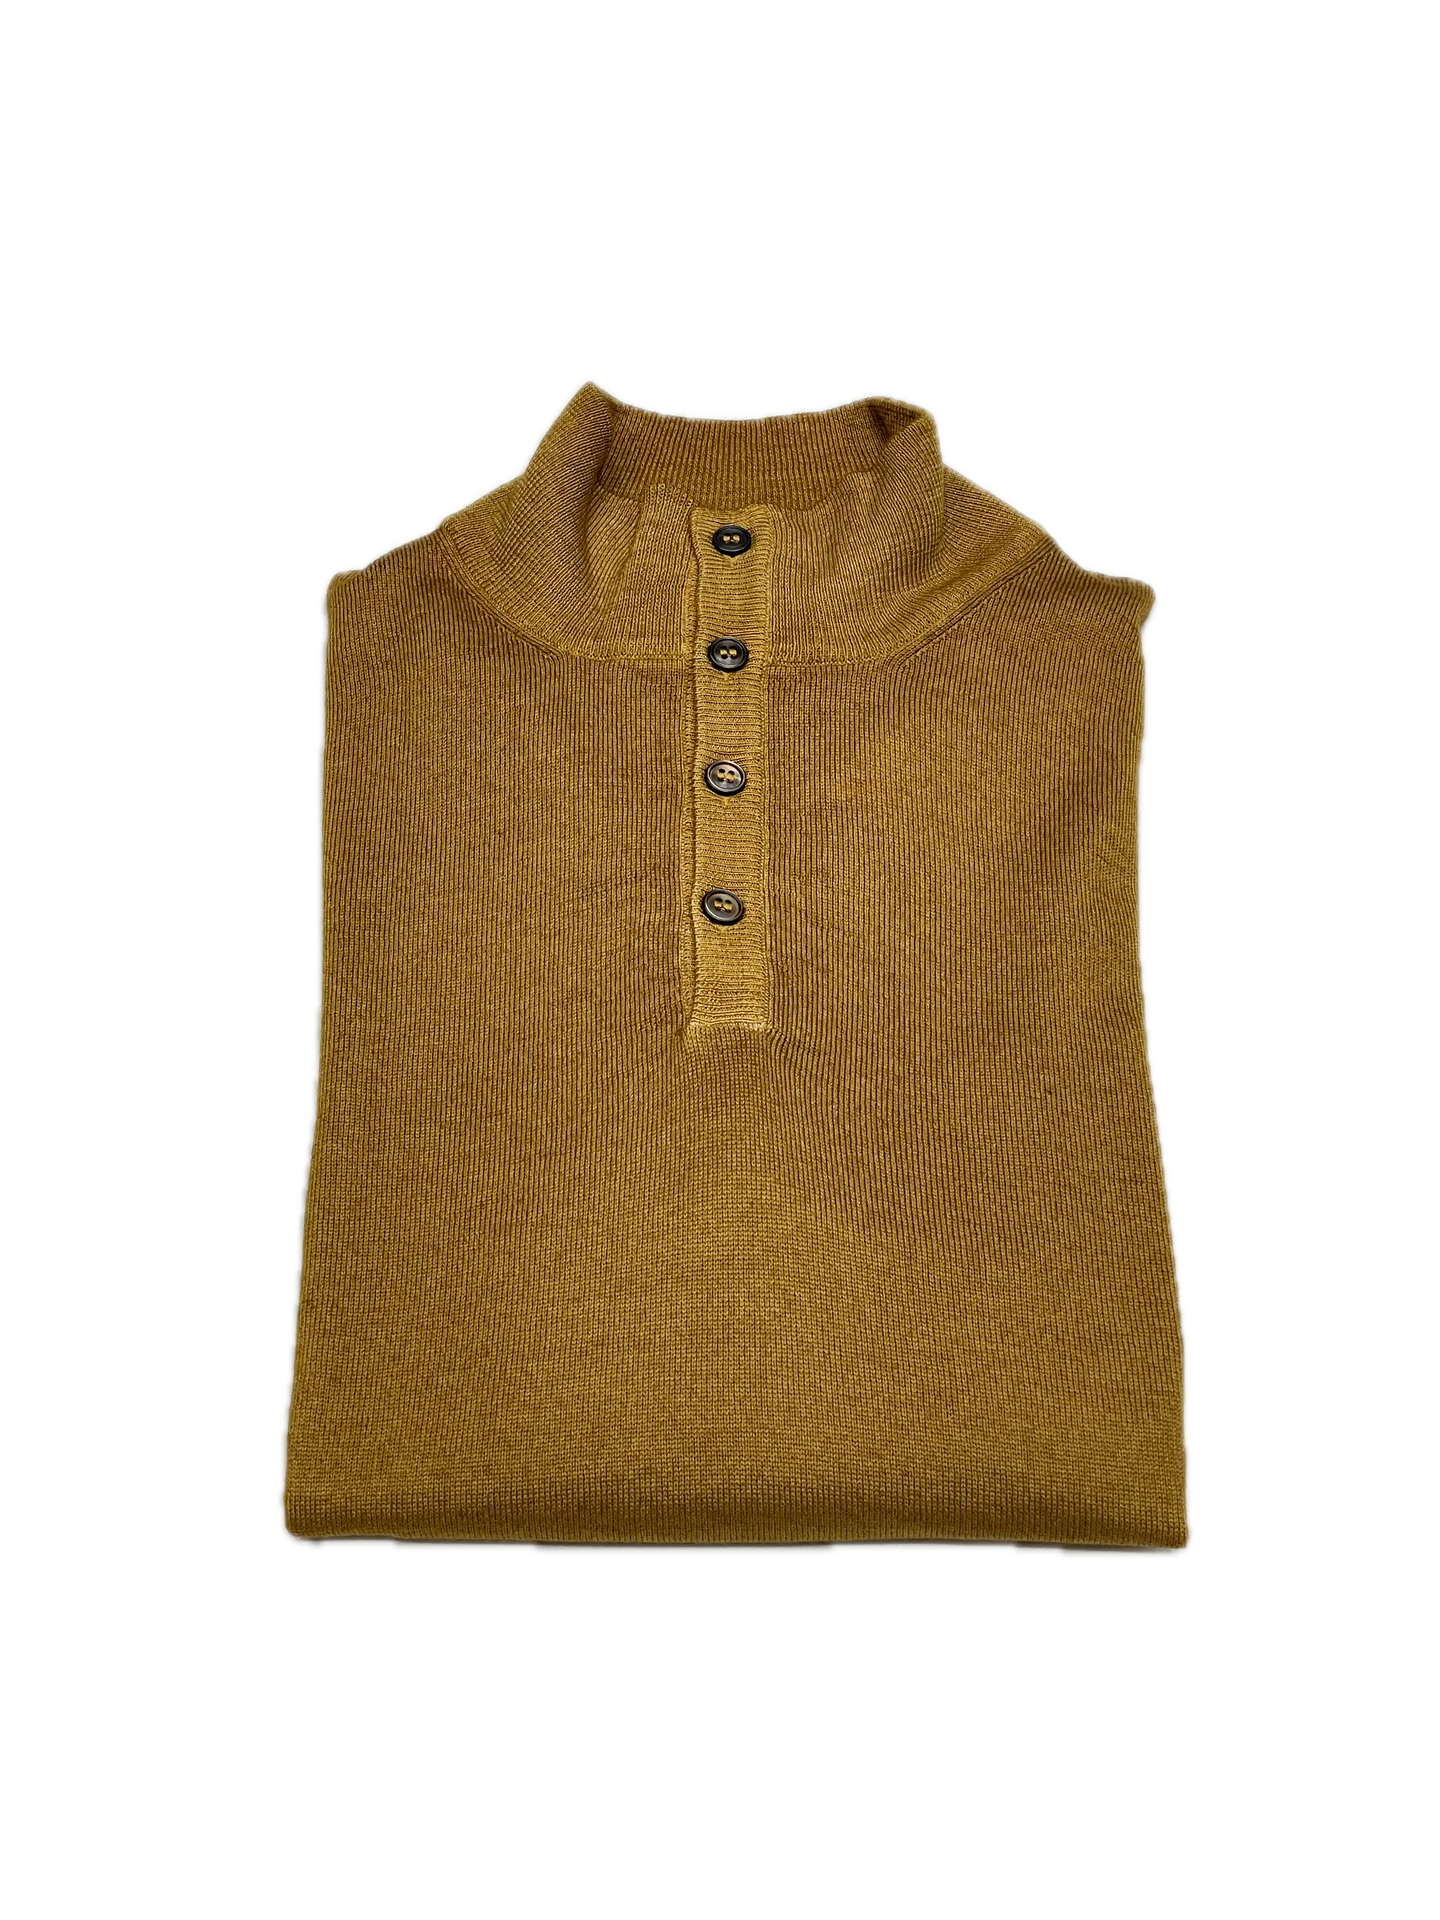 Button neck pullover in Honey vintage merino wool